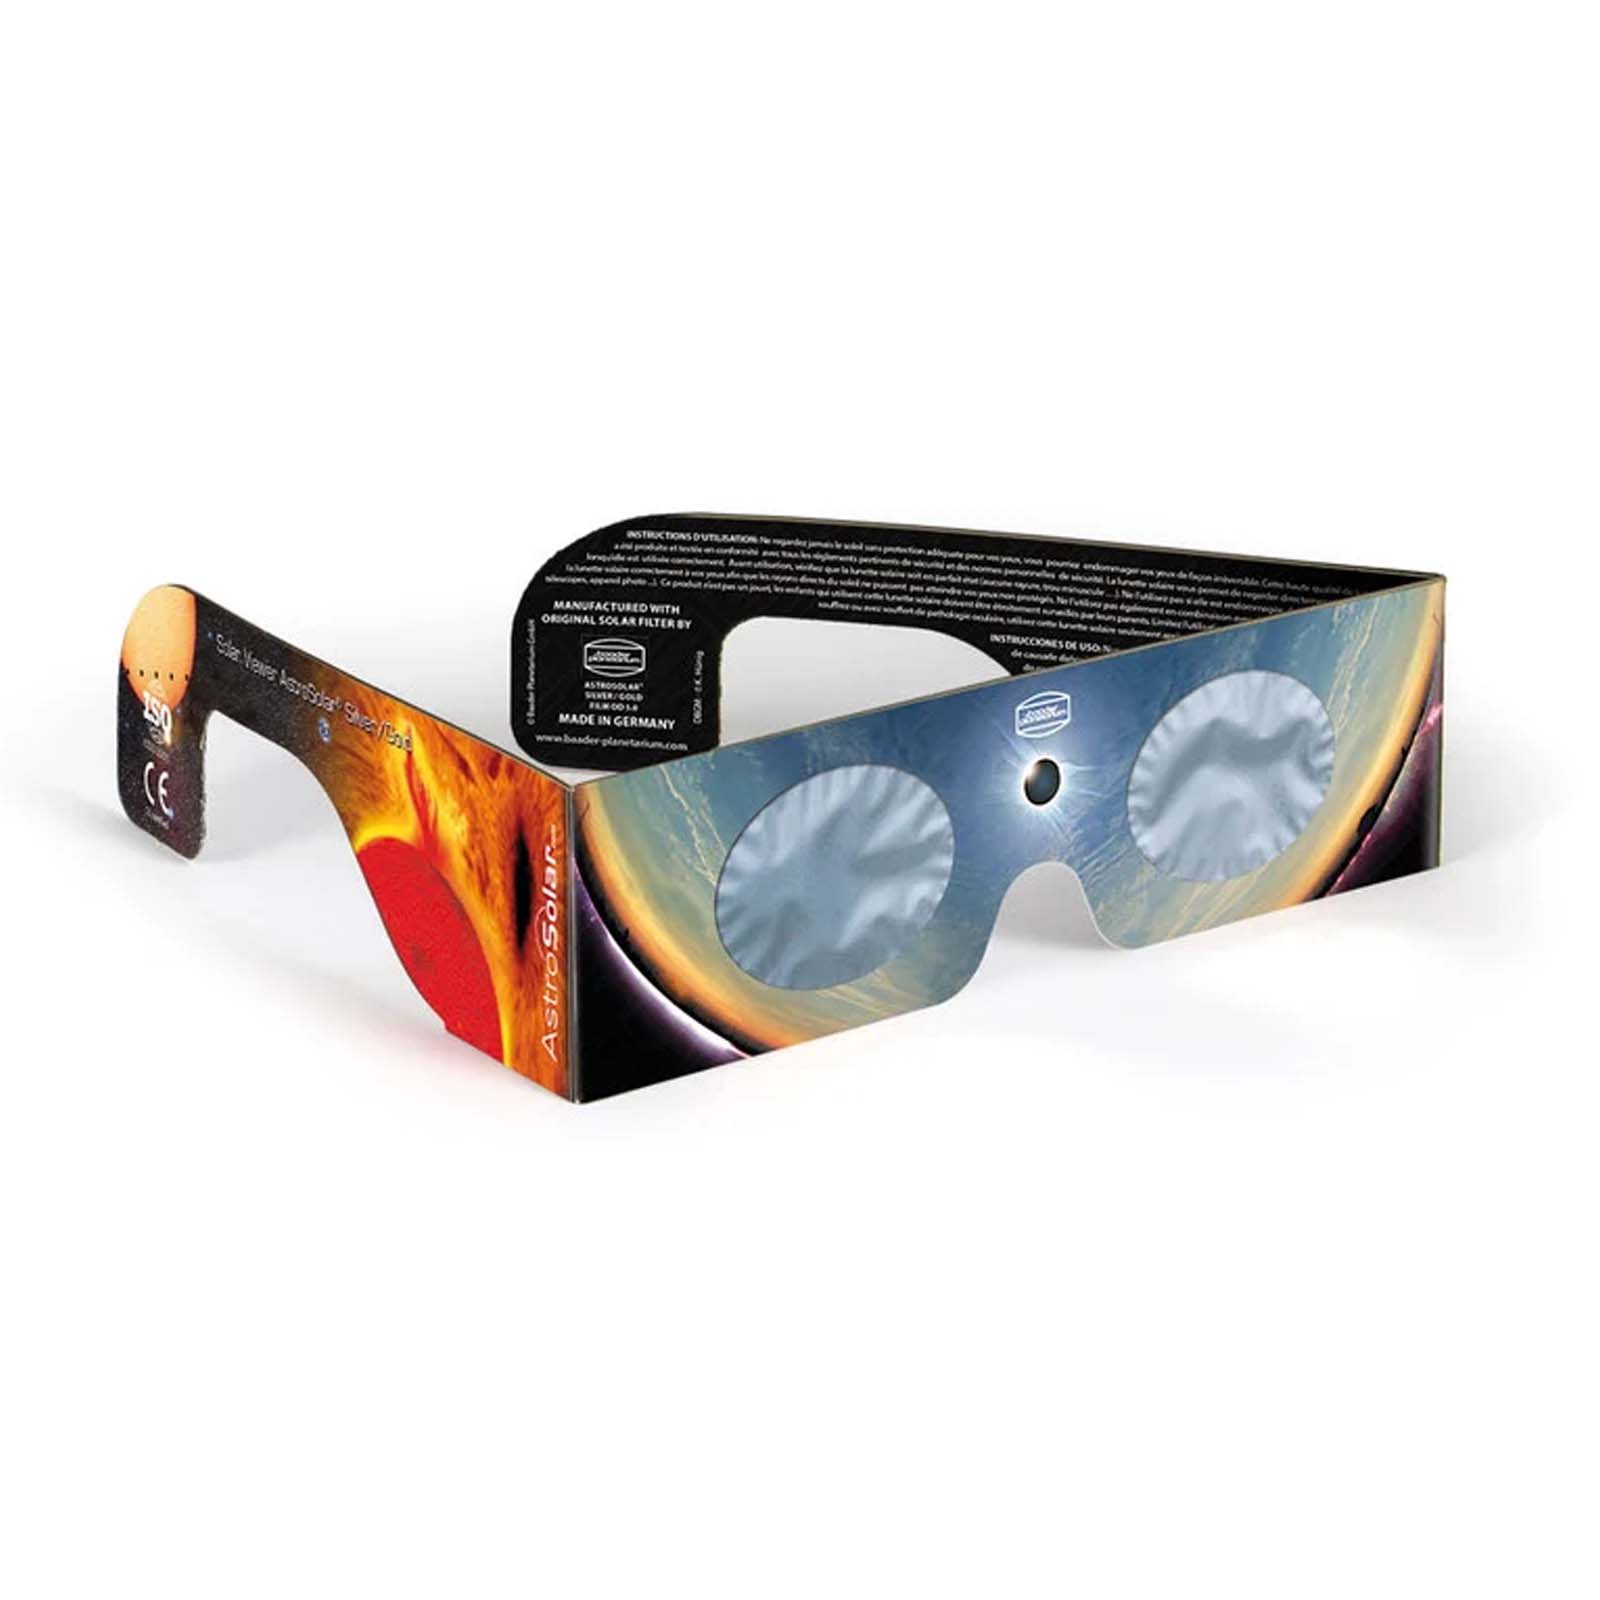 Baader Solar Viewer AstroSolar Glasses - Silver/Gold